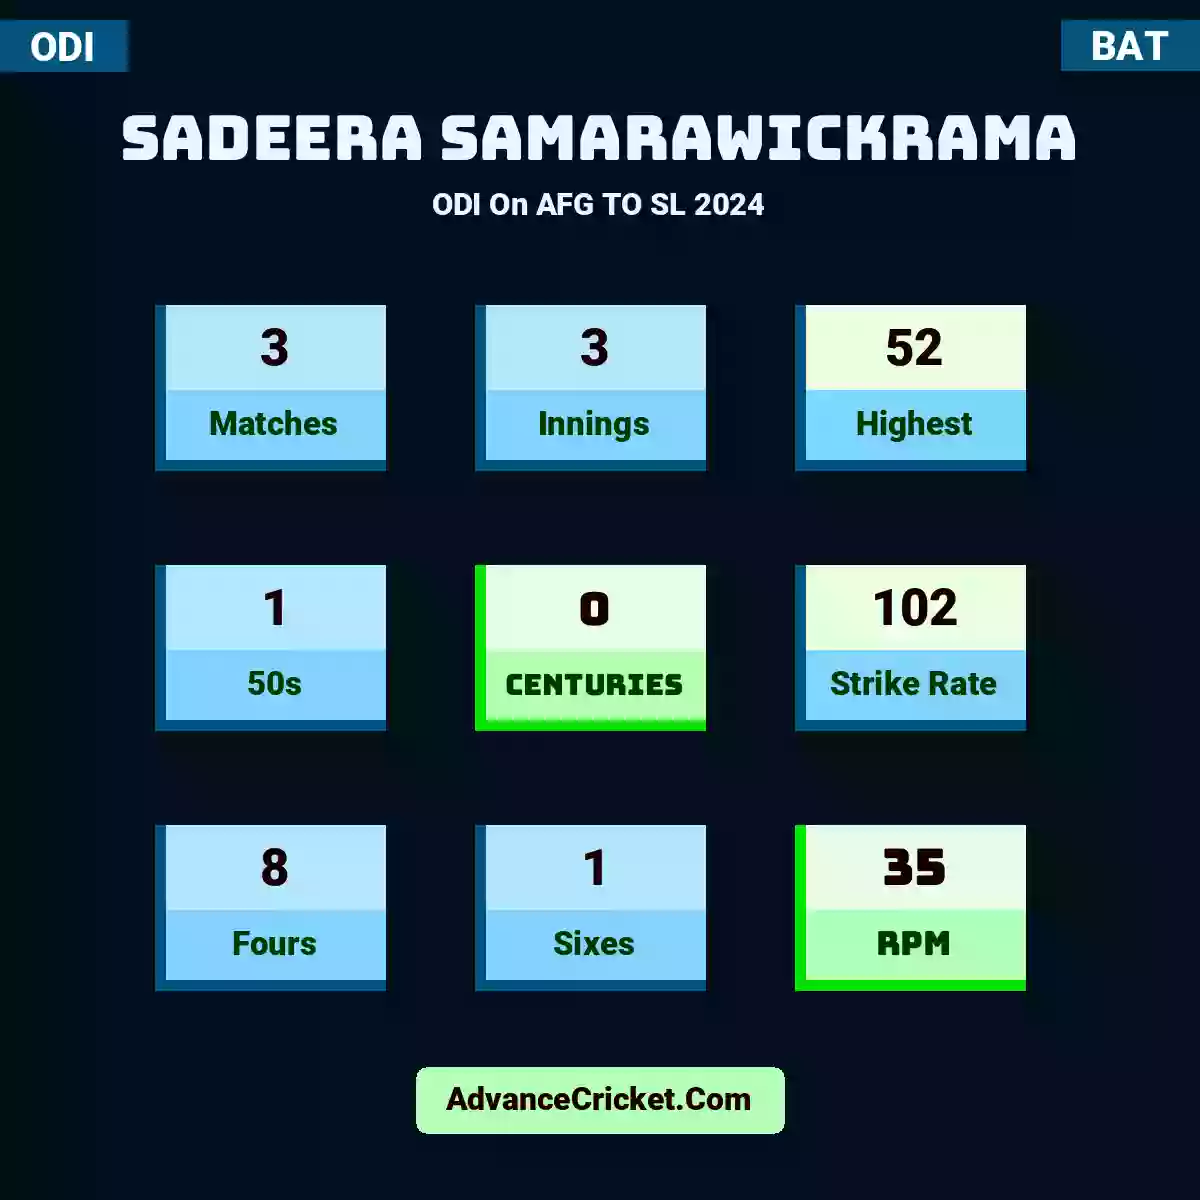 Sadeera Samarawickrama ODI  On AFG TO SL 2024, Sadeera Samarawickrama played 3 matches, scored 52 runs as highest, 1 half-centuries, and 0 centuries, with a strike rate of 102. S.Samarawickrama hit 8 fours and 1 sixes, with an RPM of 35.